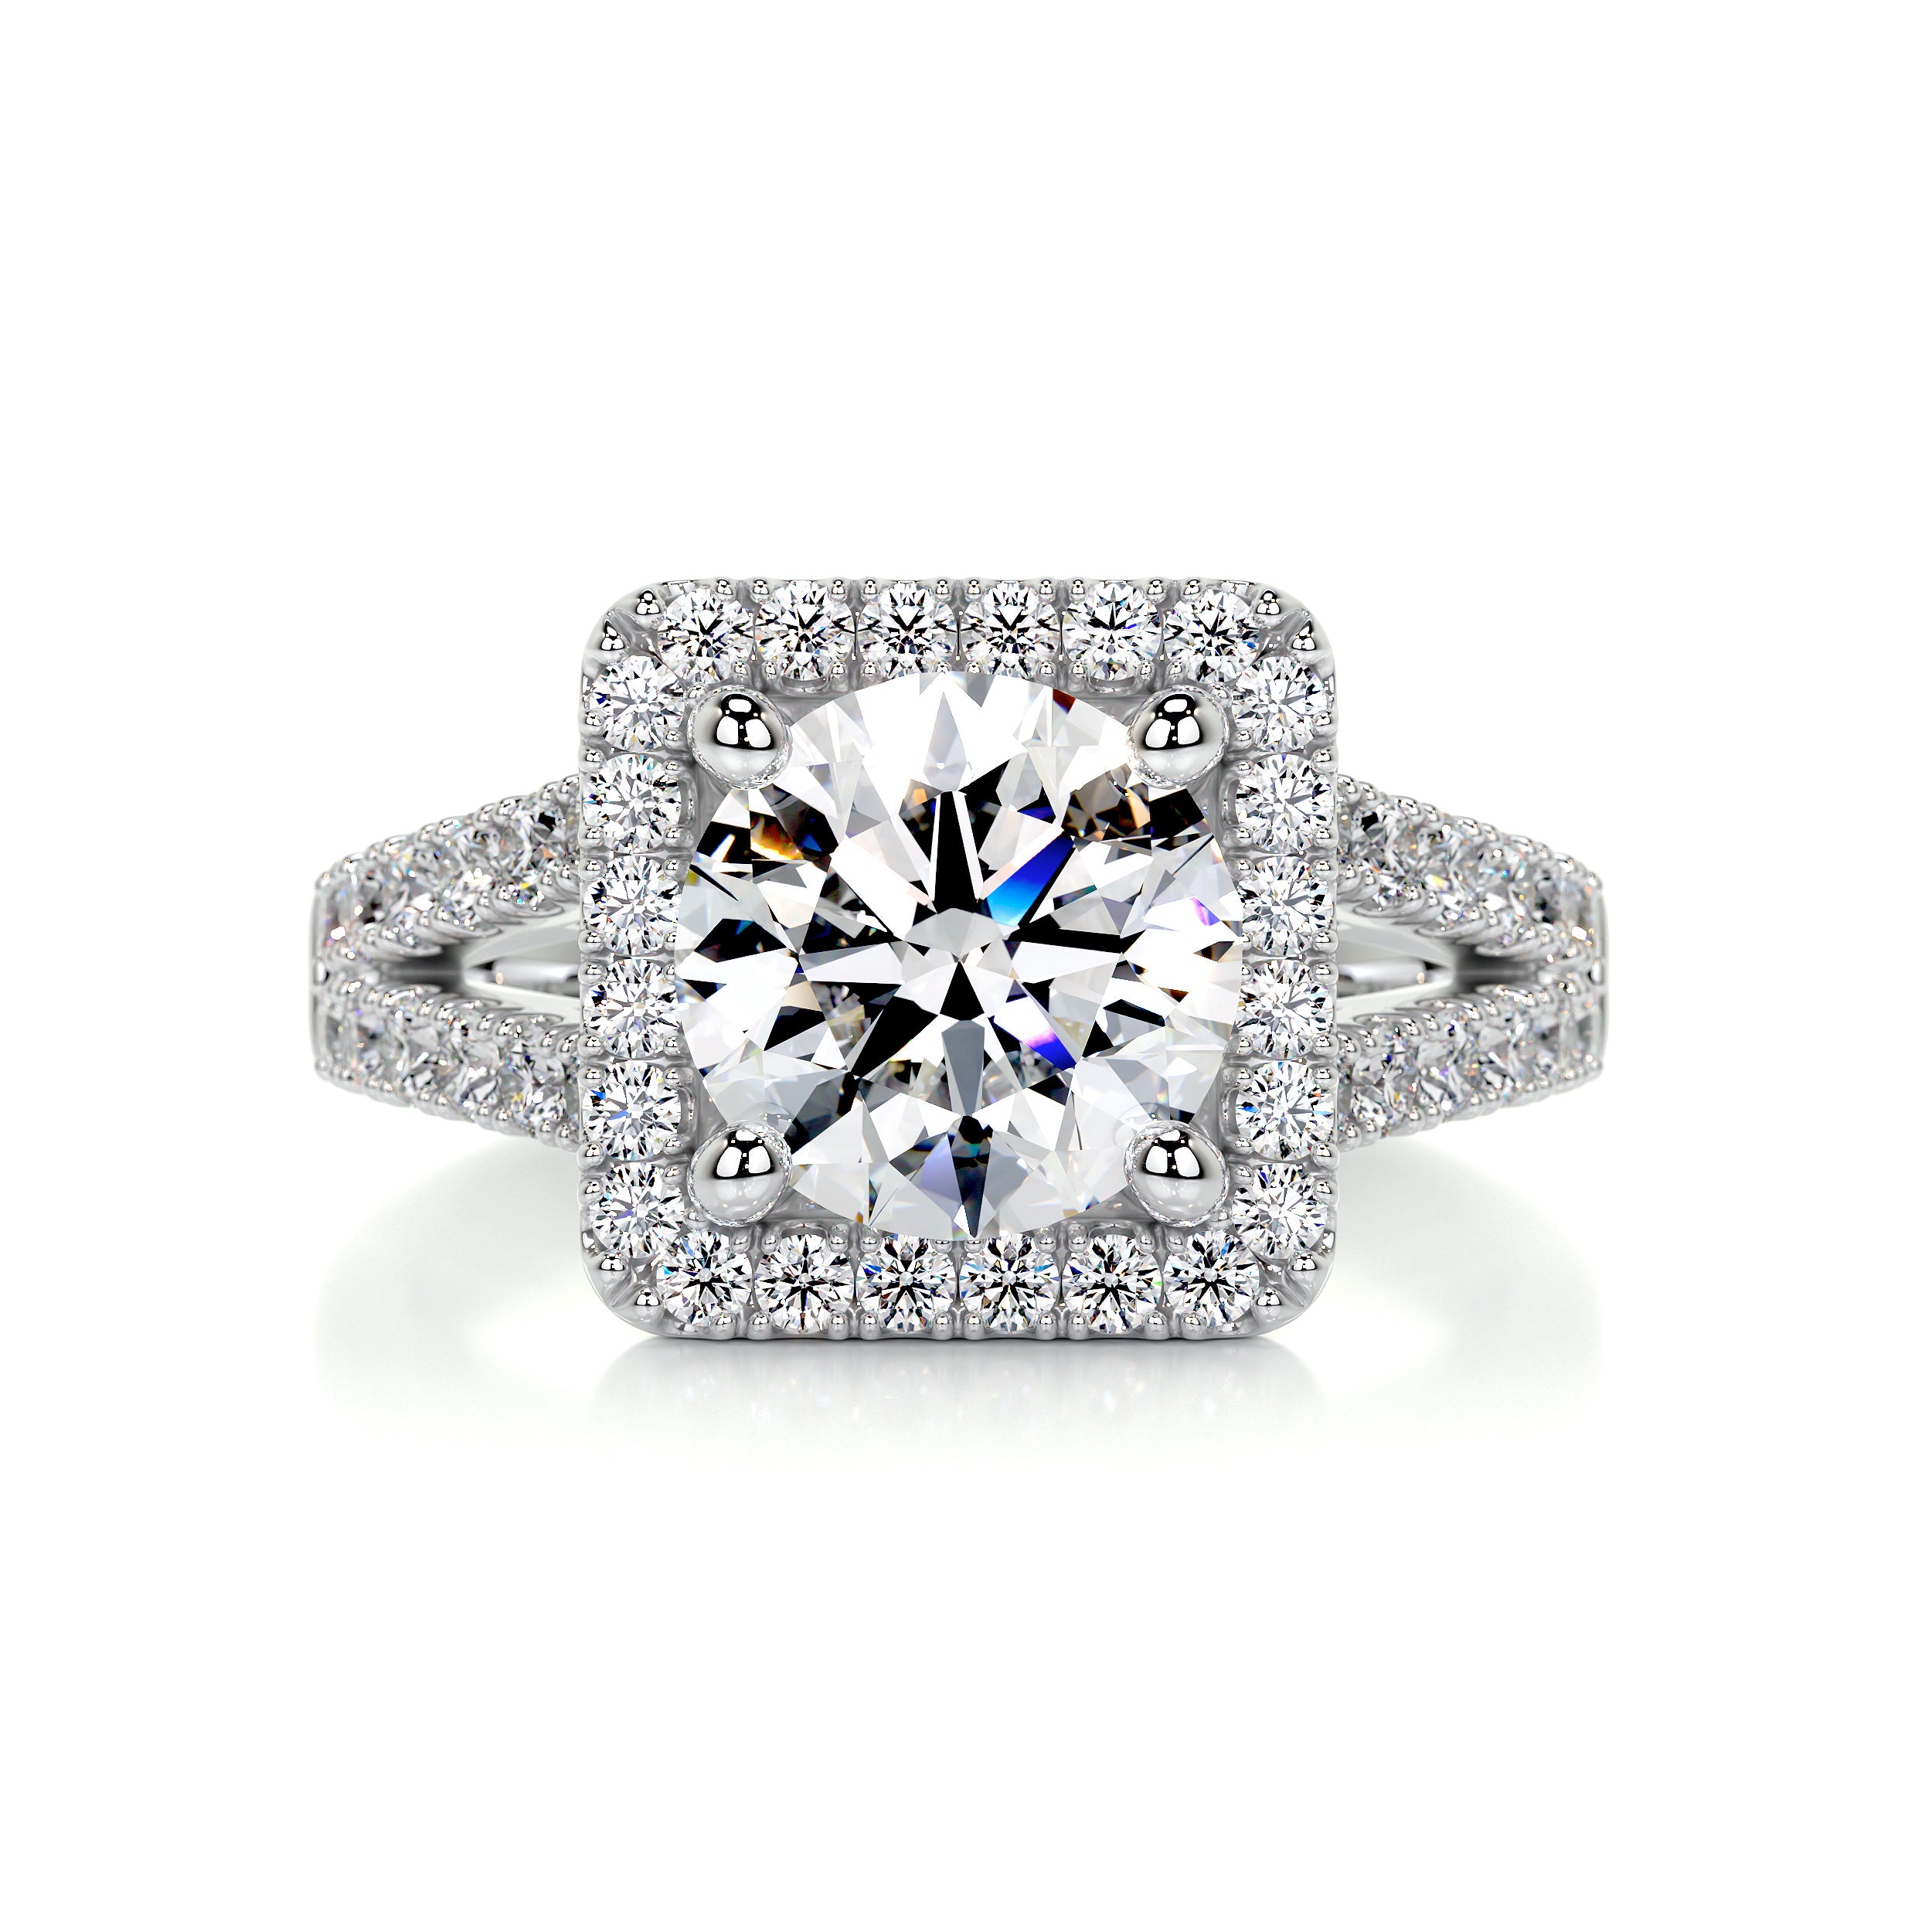 Addison Diamond Engagement Ring   (2.5 Carat) -18K White Gold